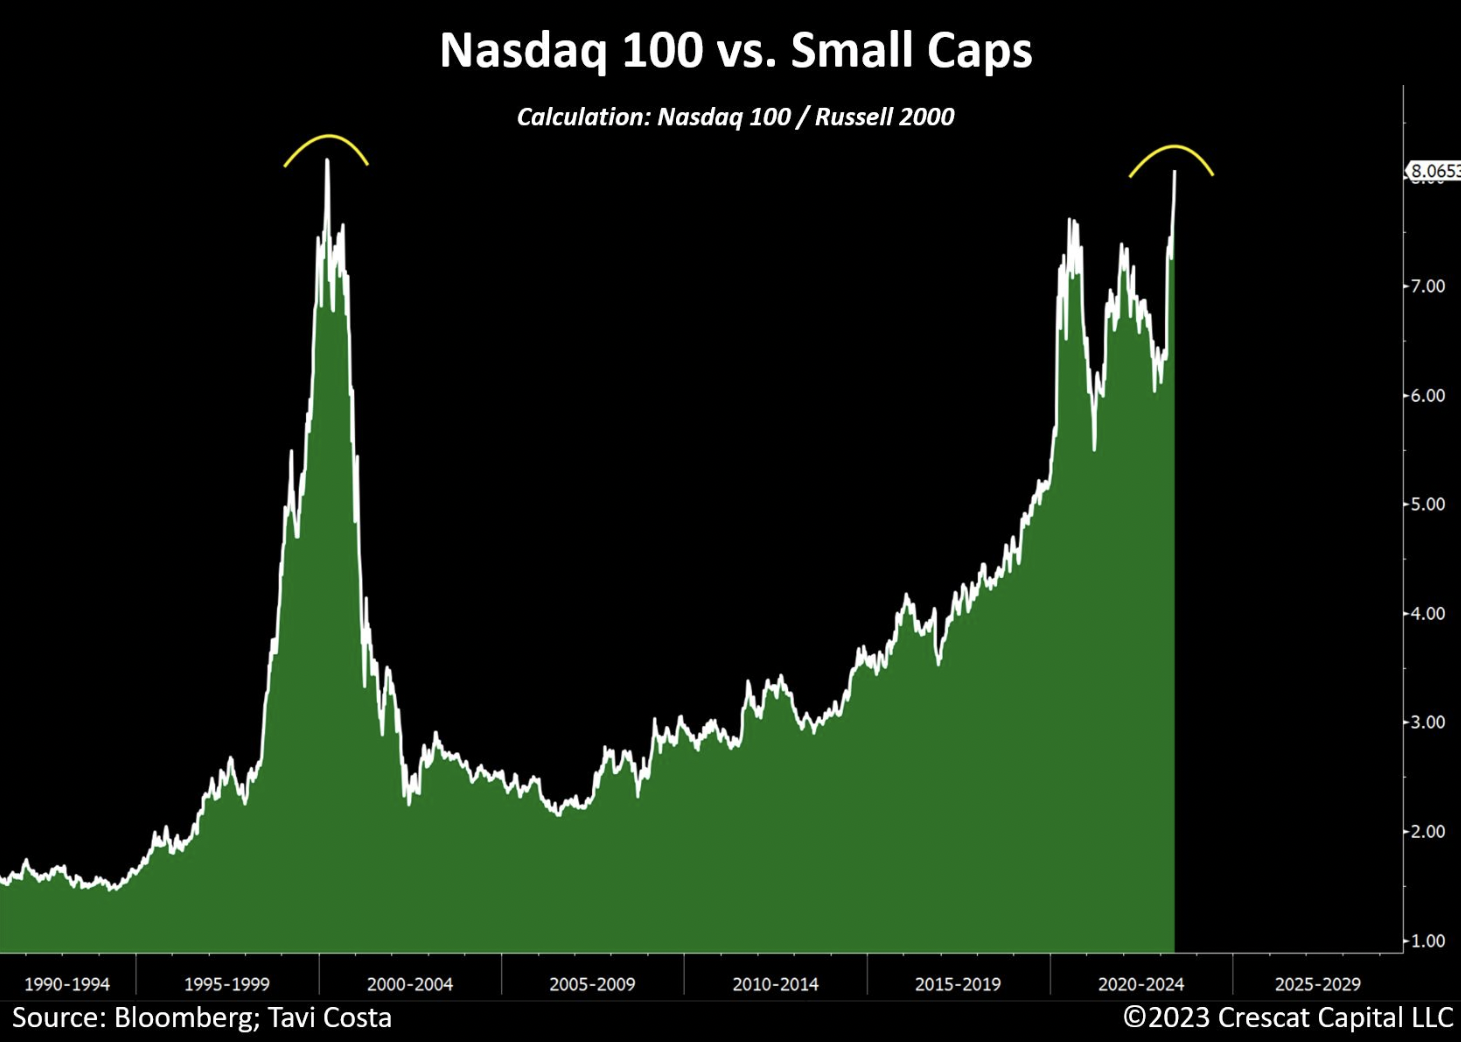 Nasdaq 100 to Small Caps